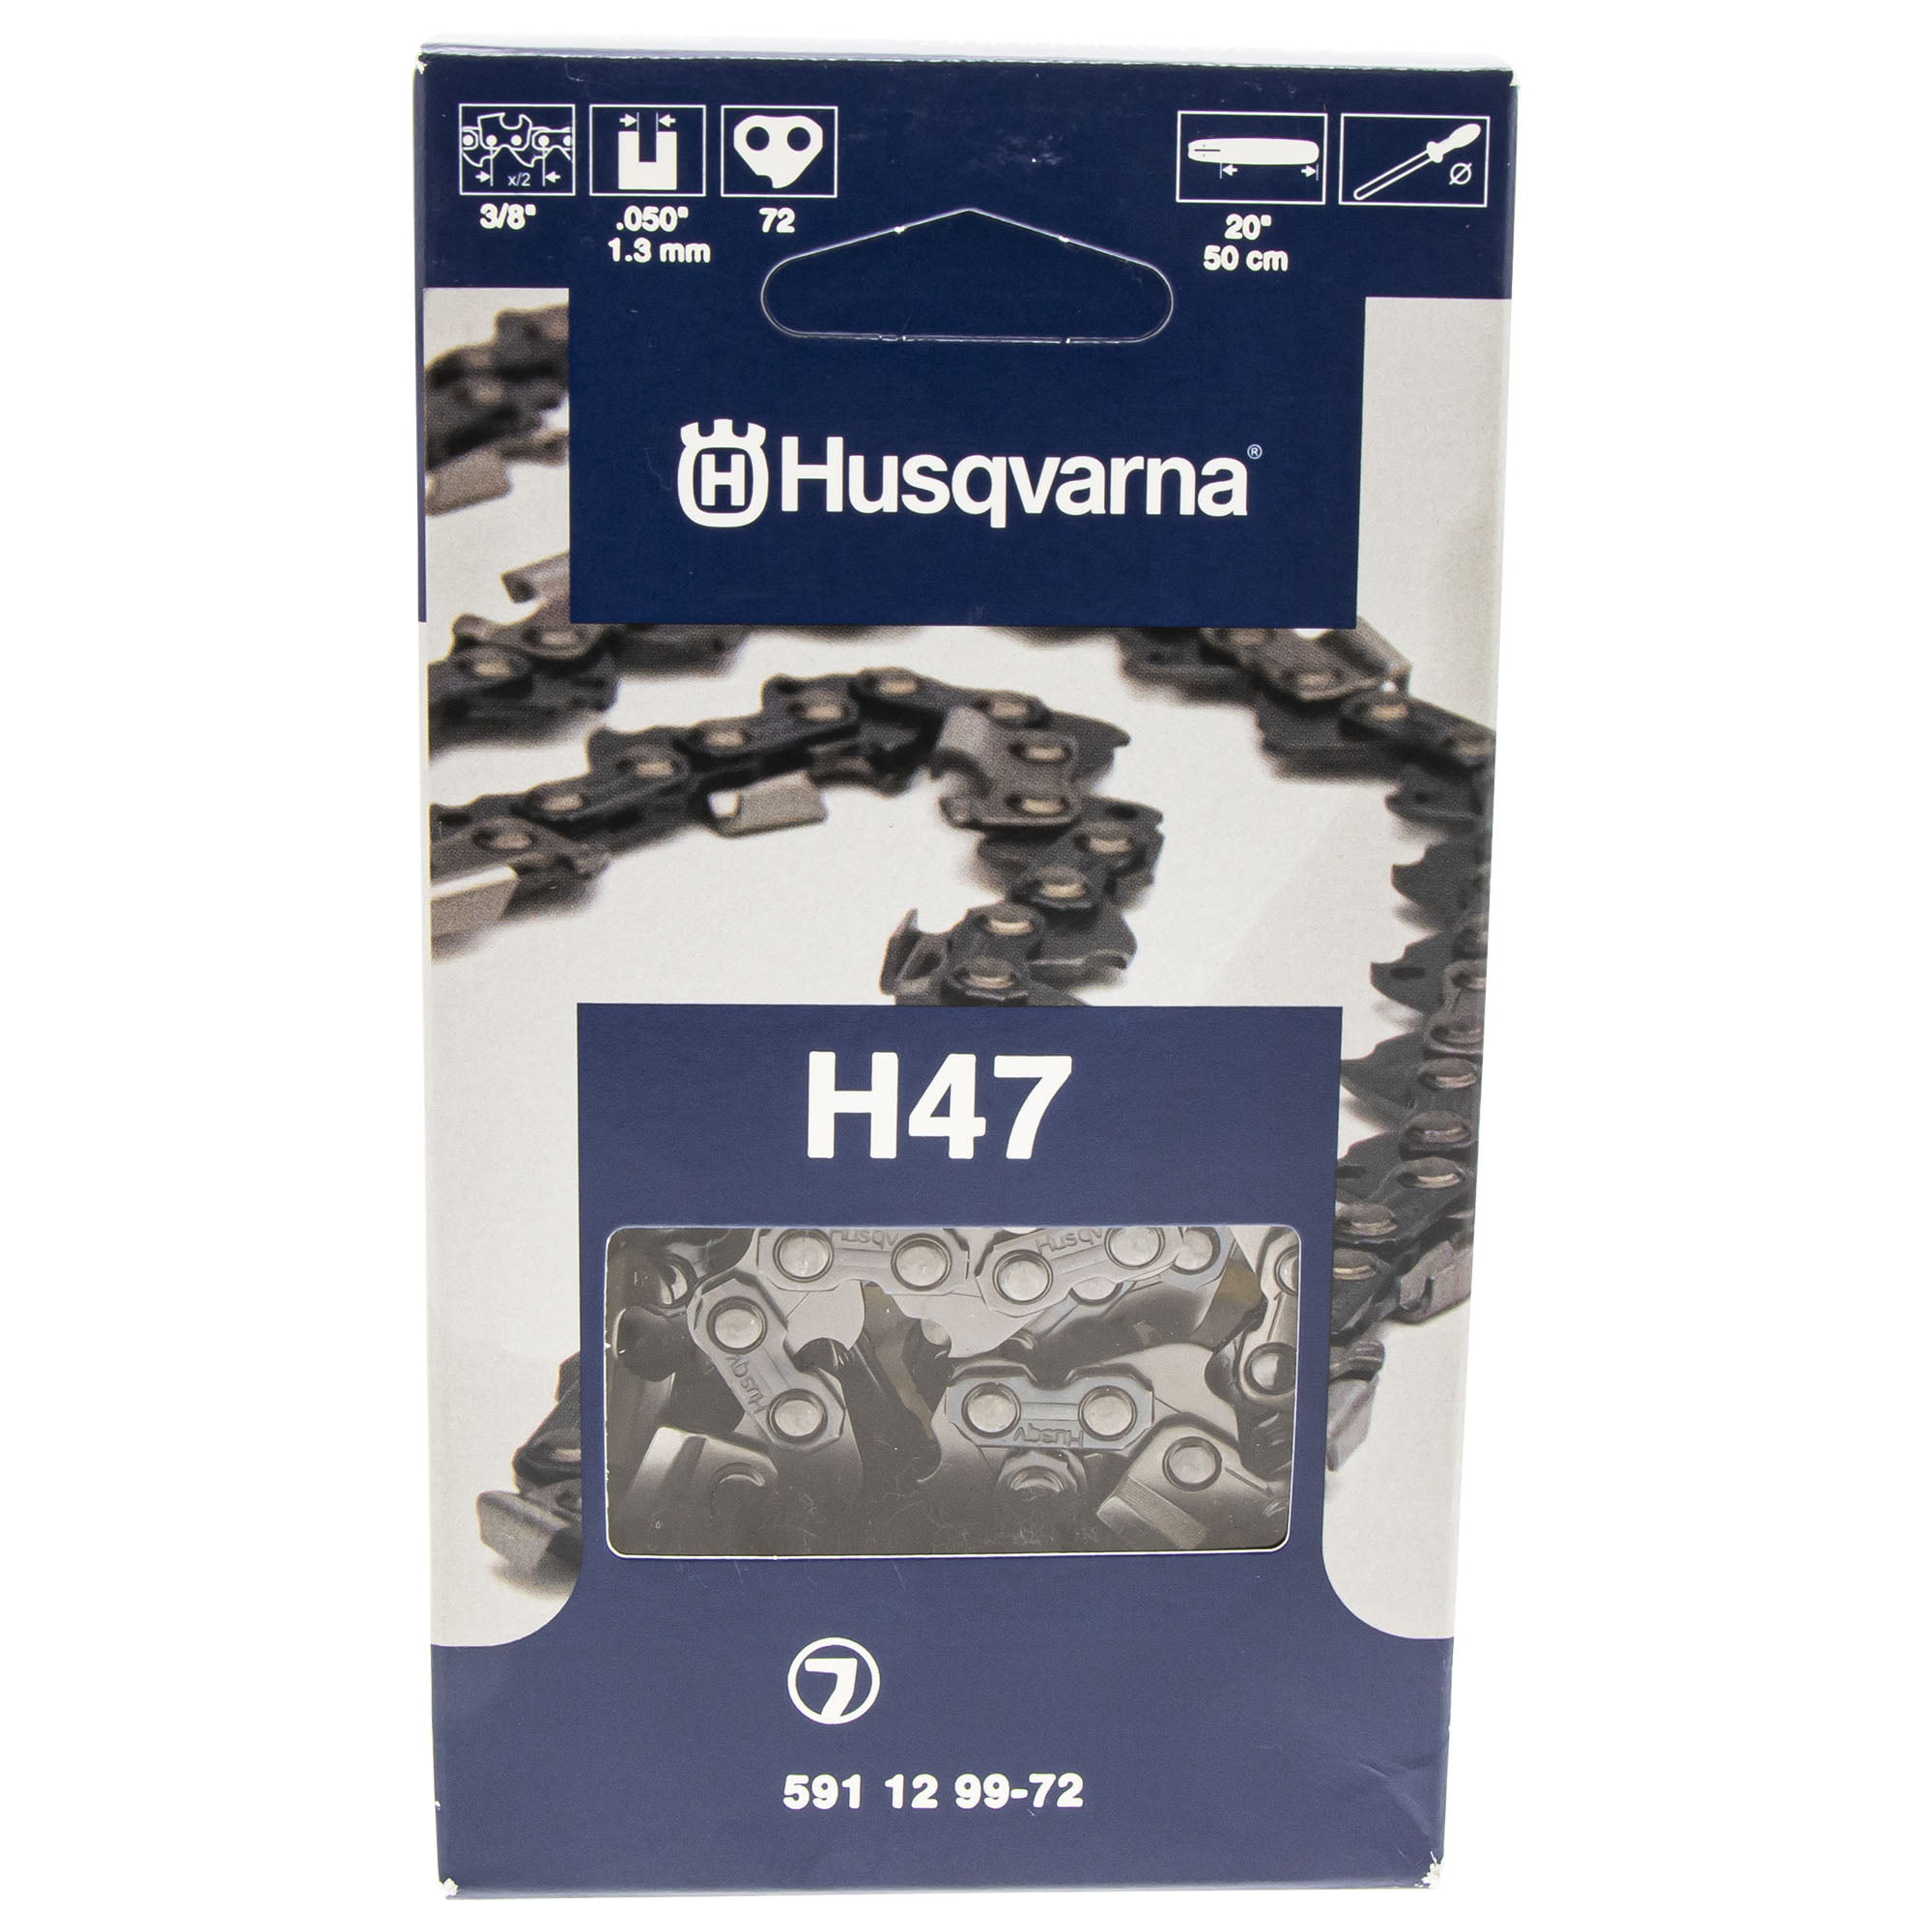 20" Bar Skip Tooth Chisel Chain 3/8'' .058 Gauge 72 DL for Husqvarna 50cm  Hot 